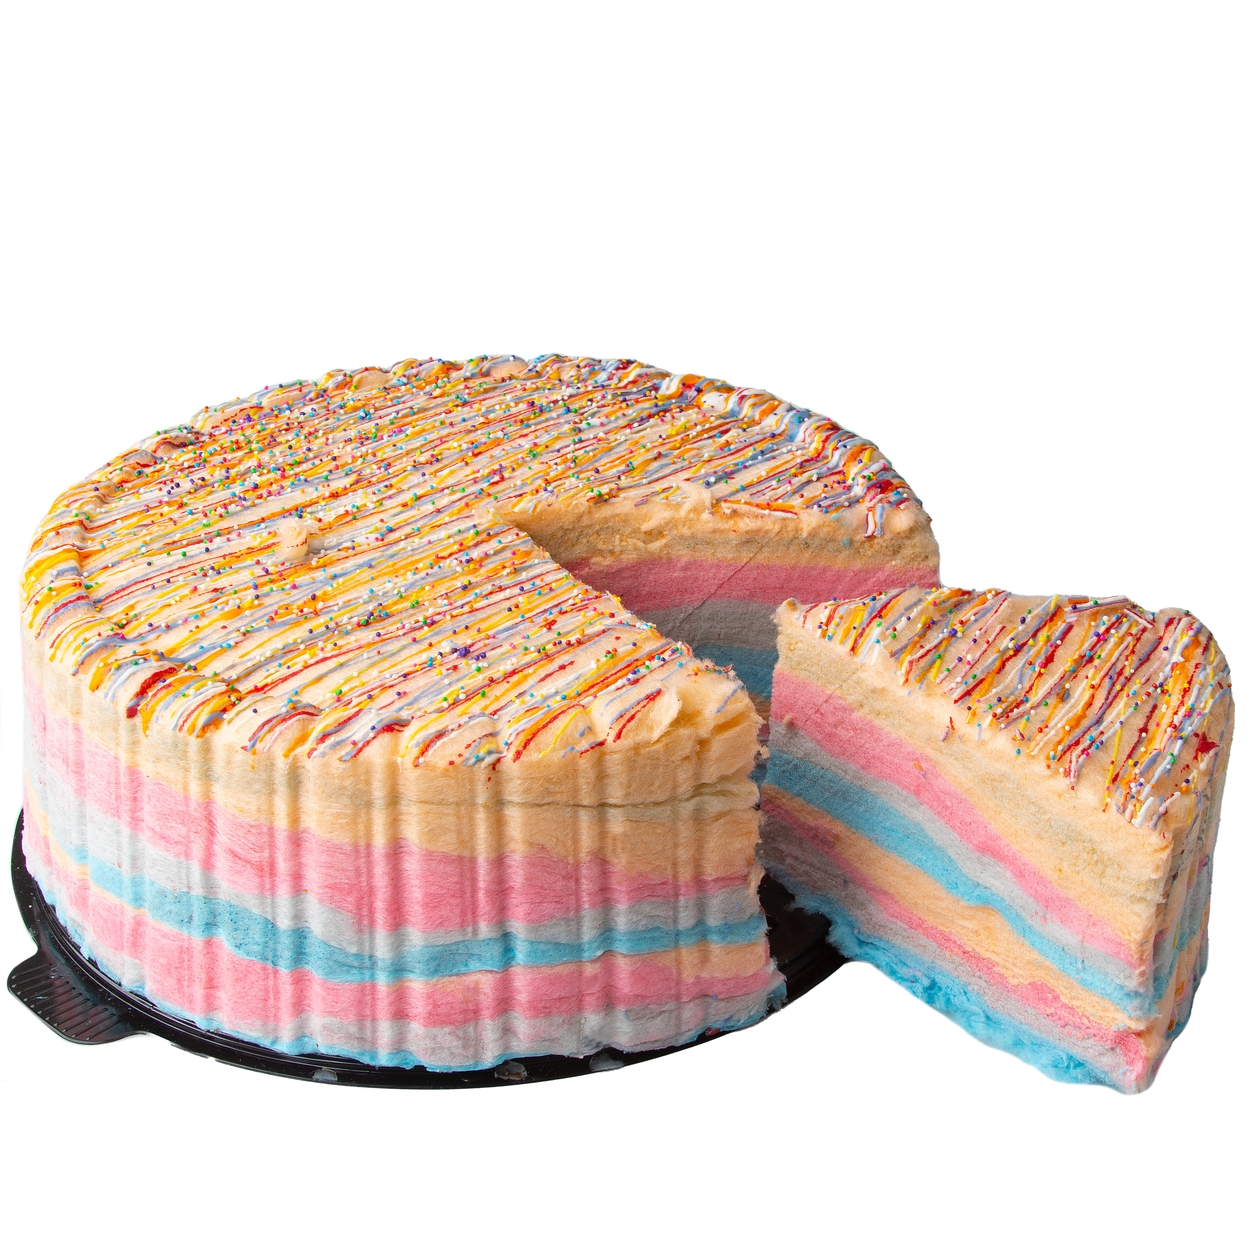 Cotton Candy Cake - Liv for Cake